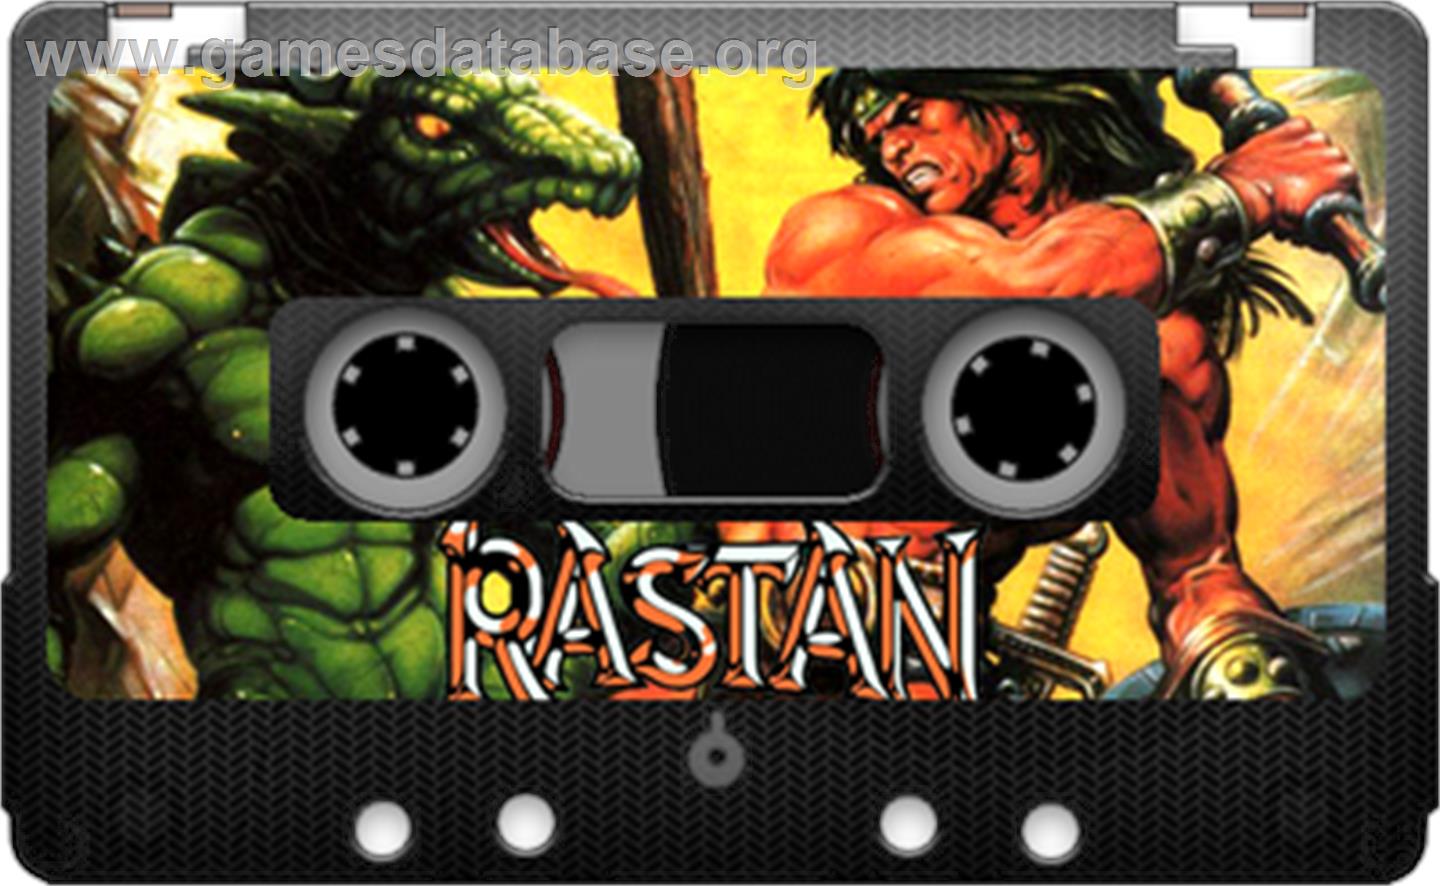 Rastan - Sinclair ZX Spectrum - Artwork - Cartridge